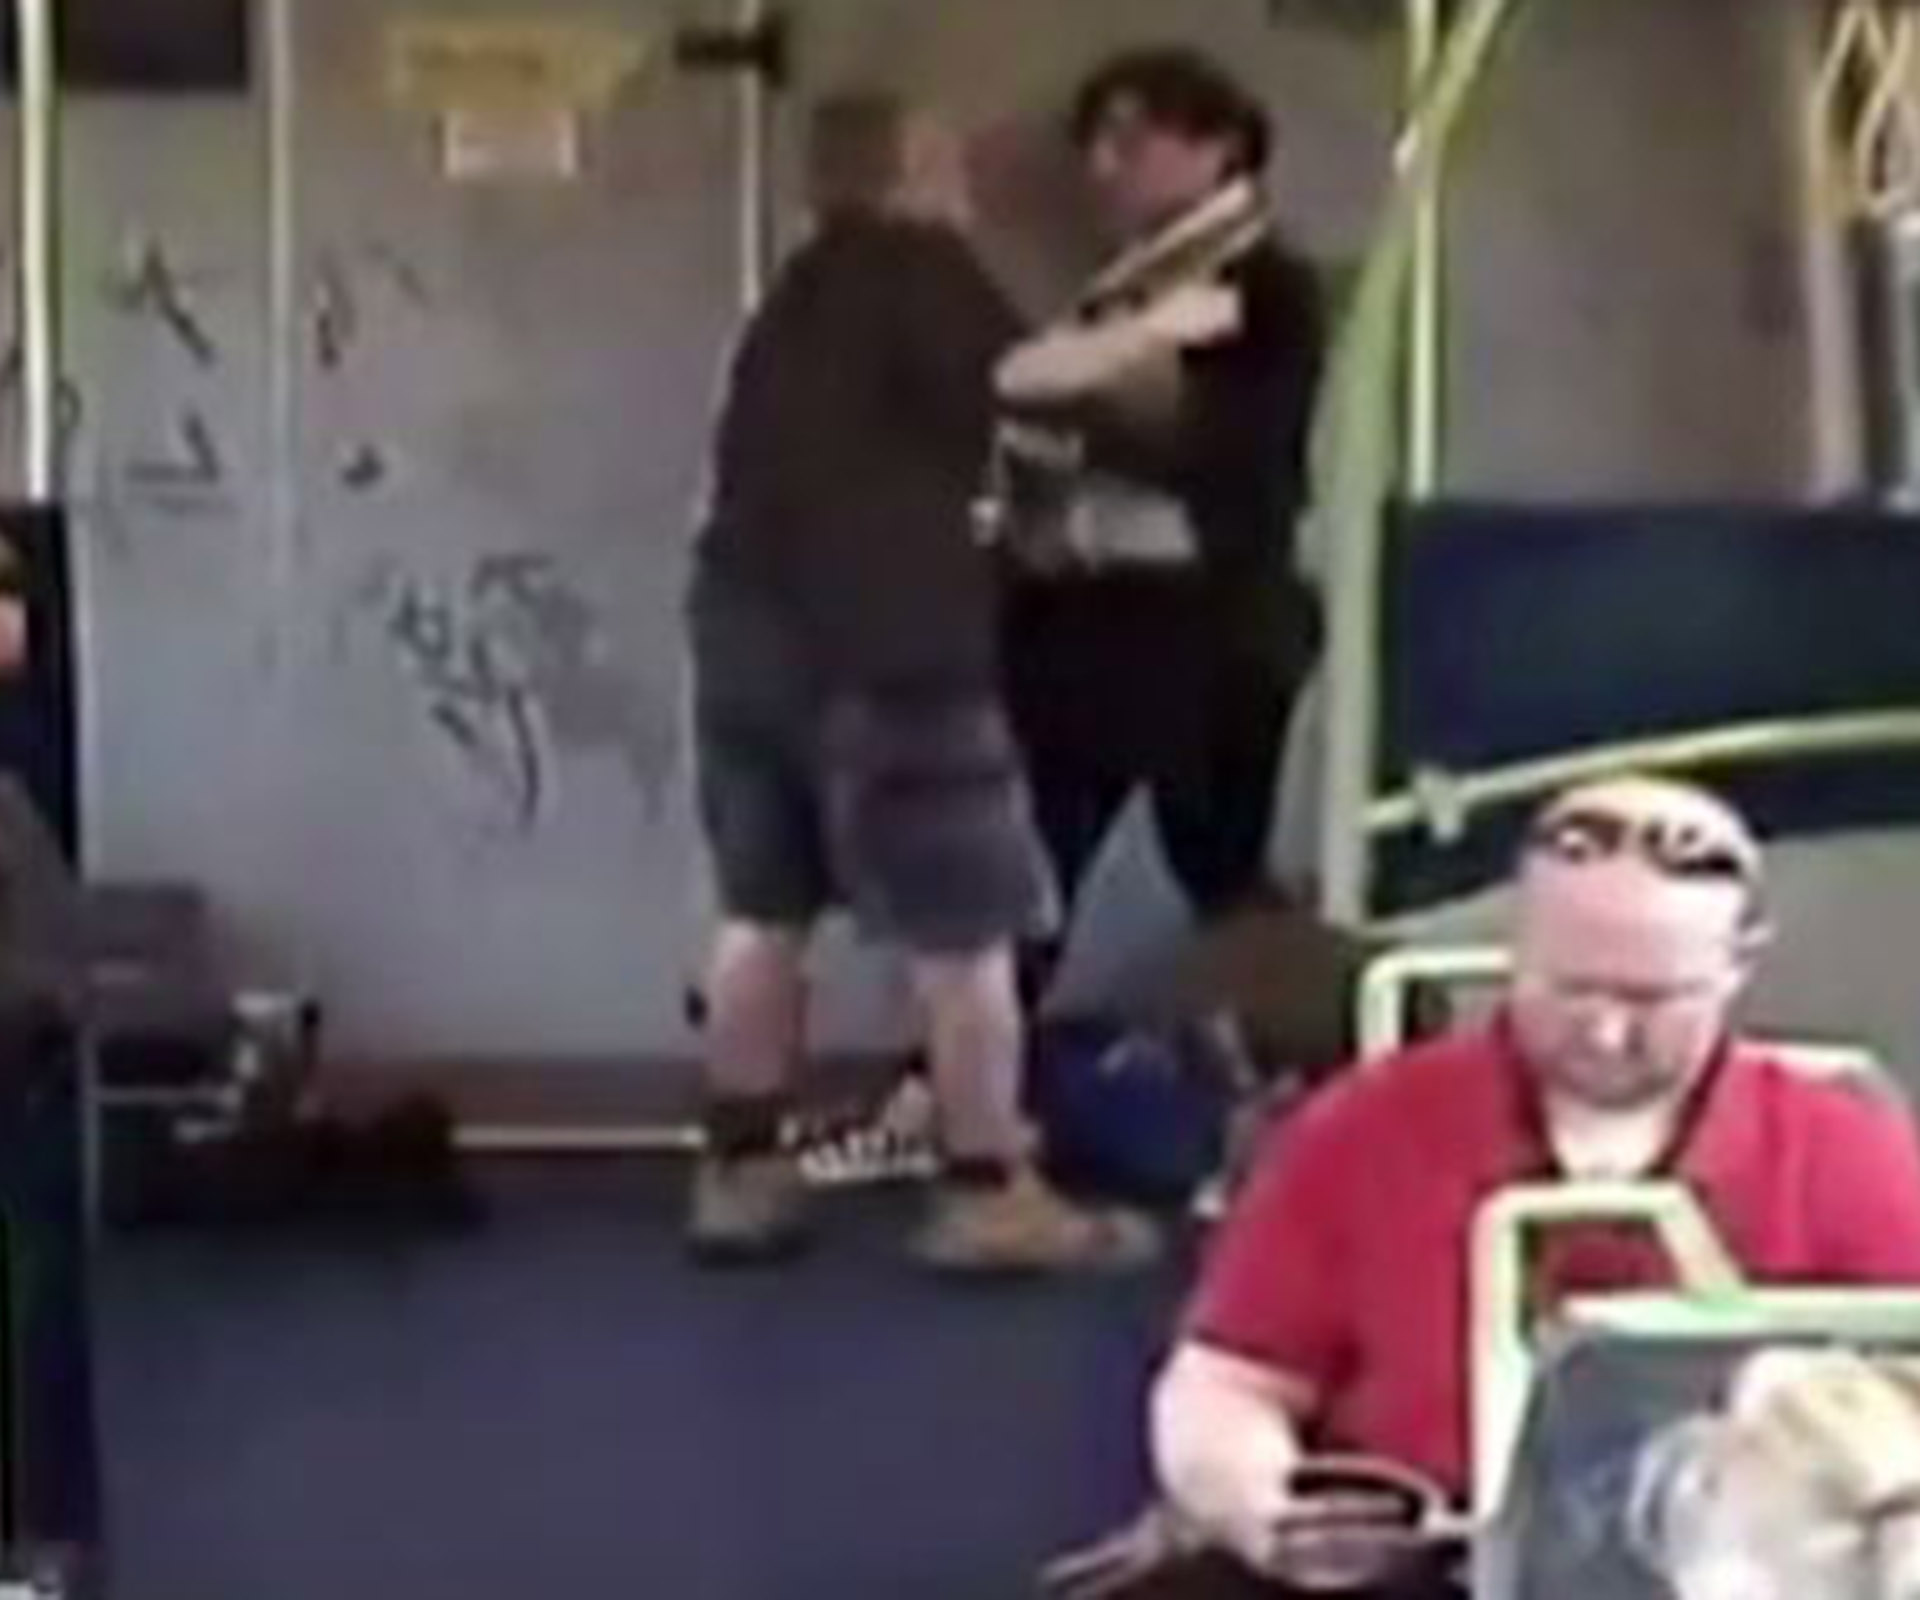 Disturbing footage of man choking woman on Melbourne train